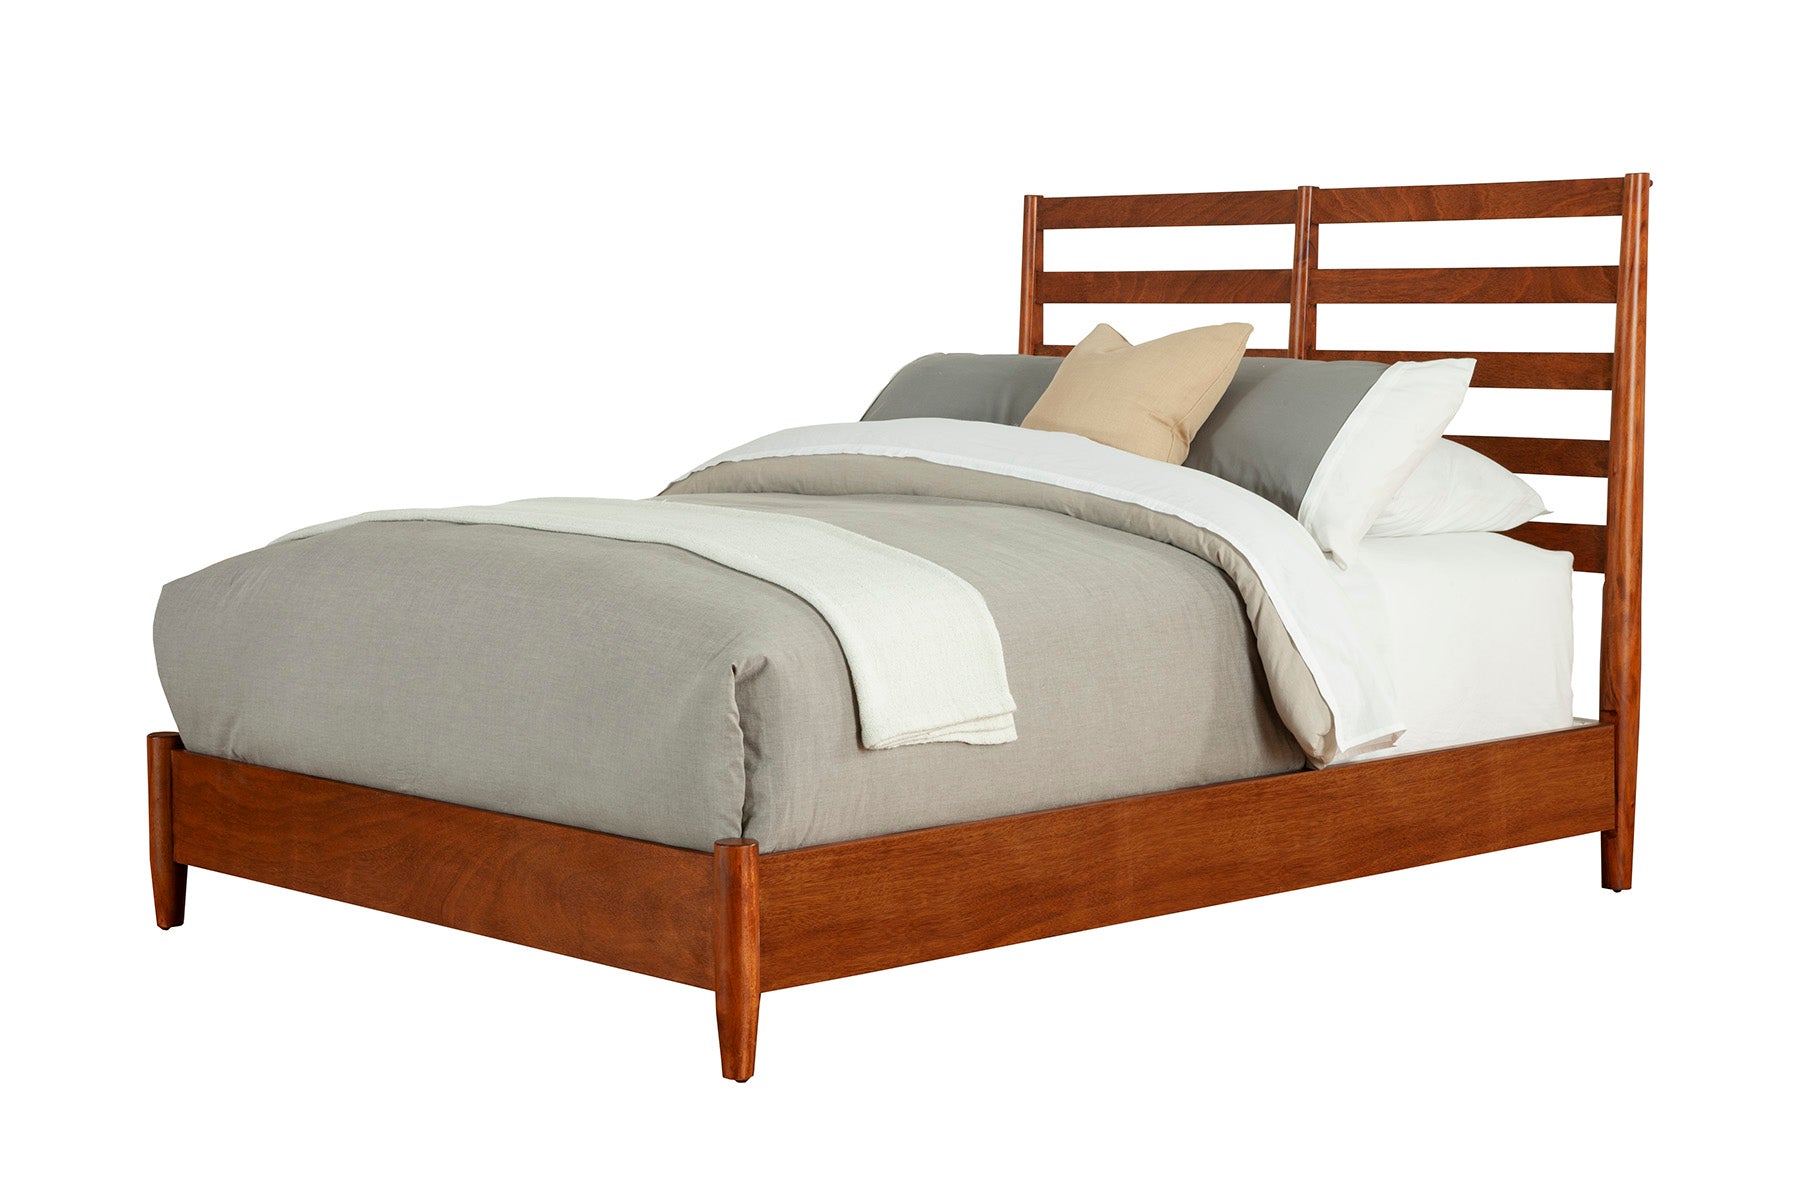 Flynn Retro Bed, Acorn - Alpine Furniture